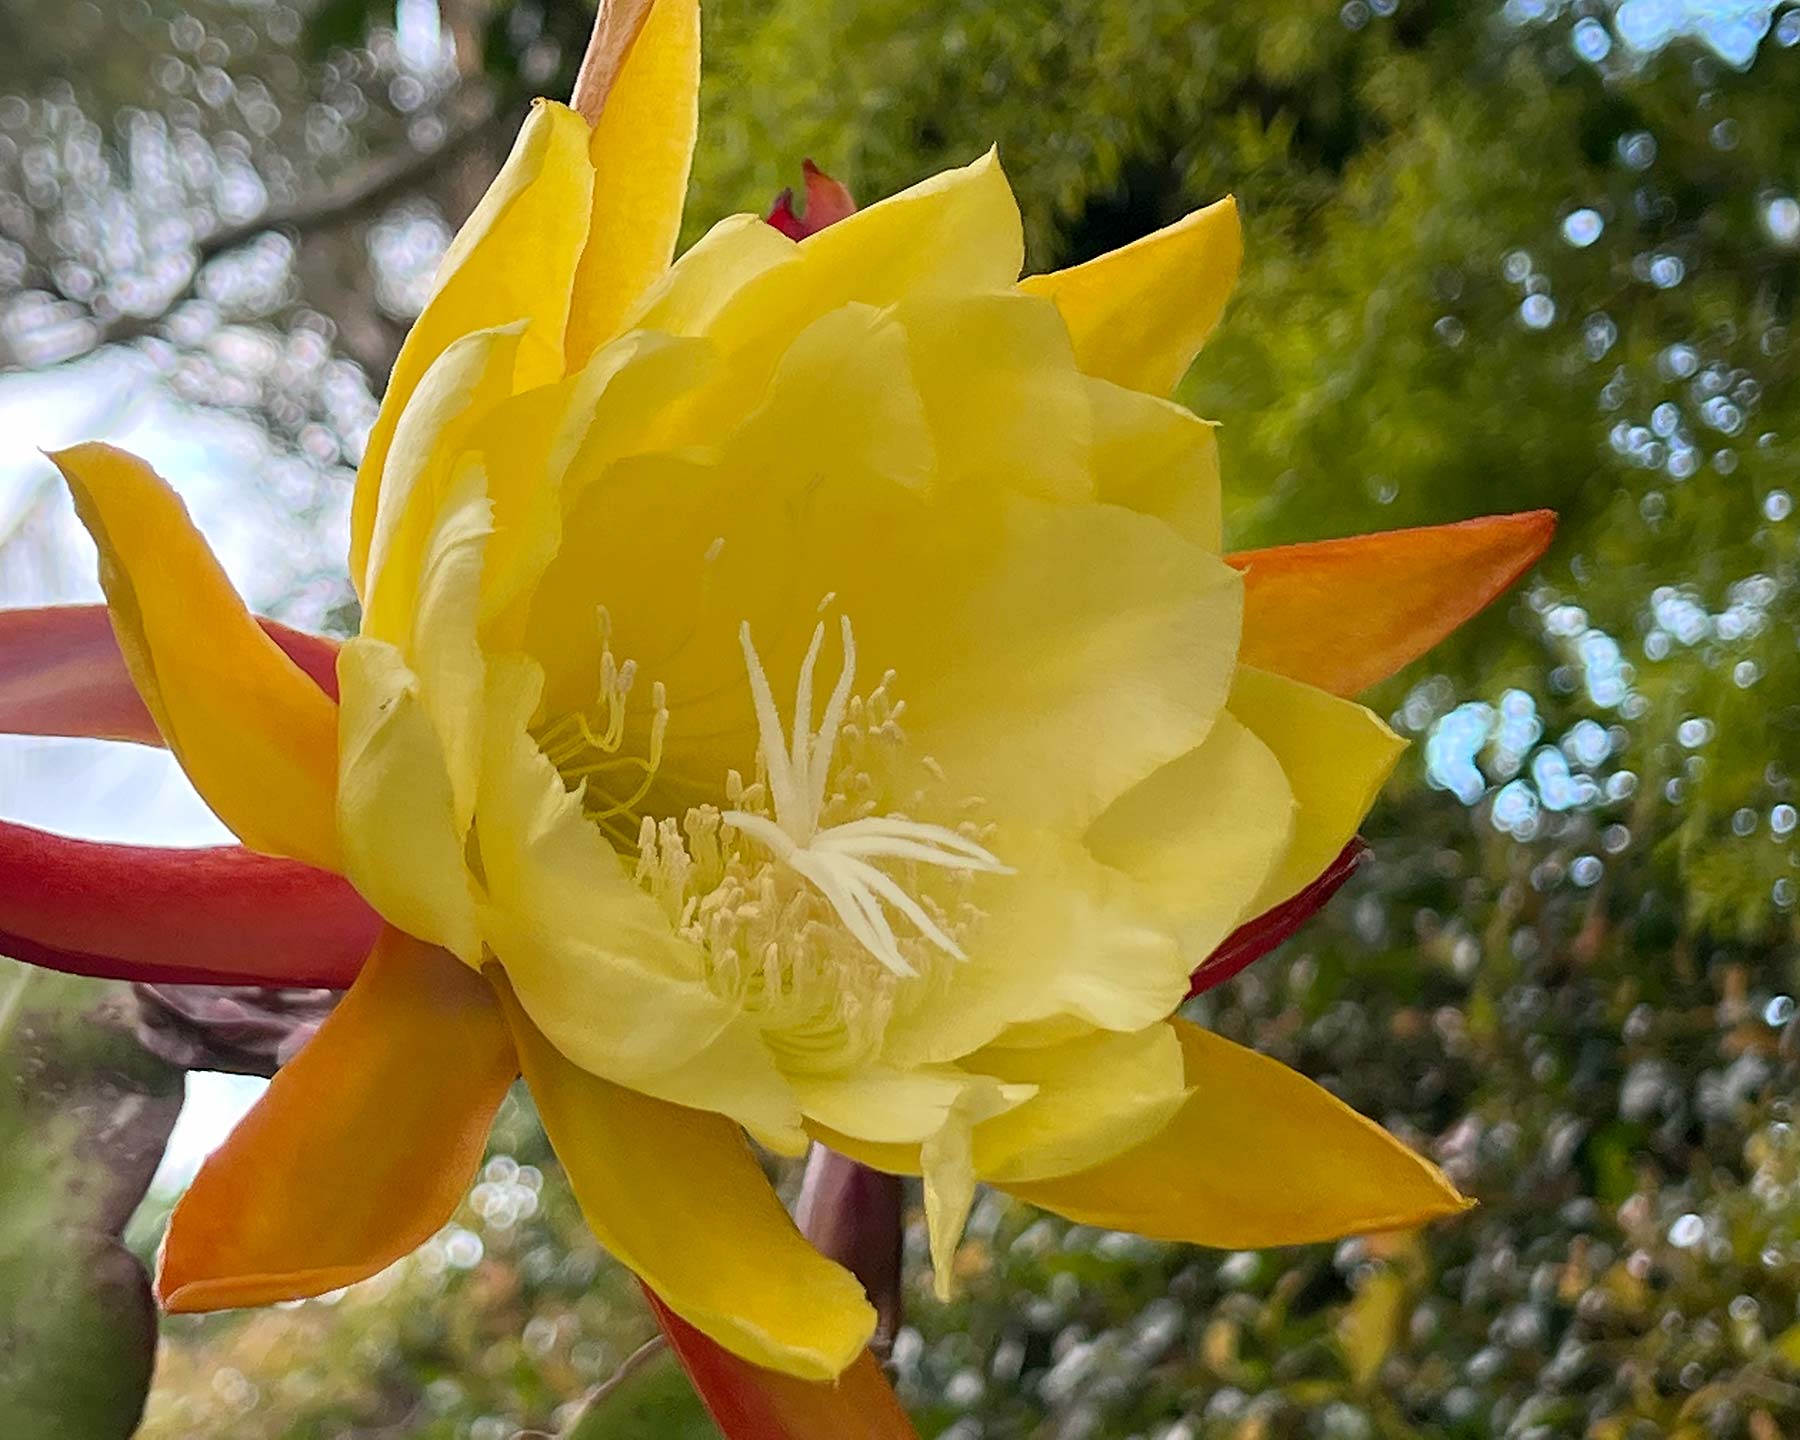 Epiphyllum Hybrid in yellow